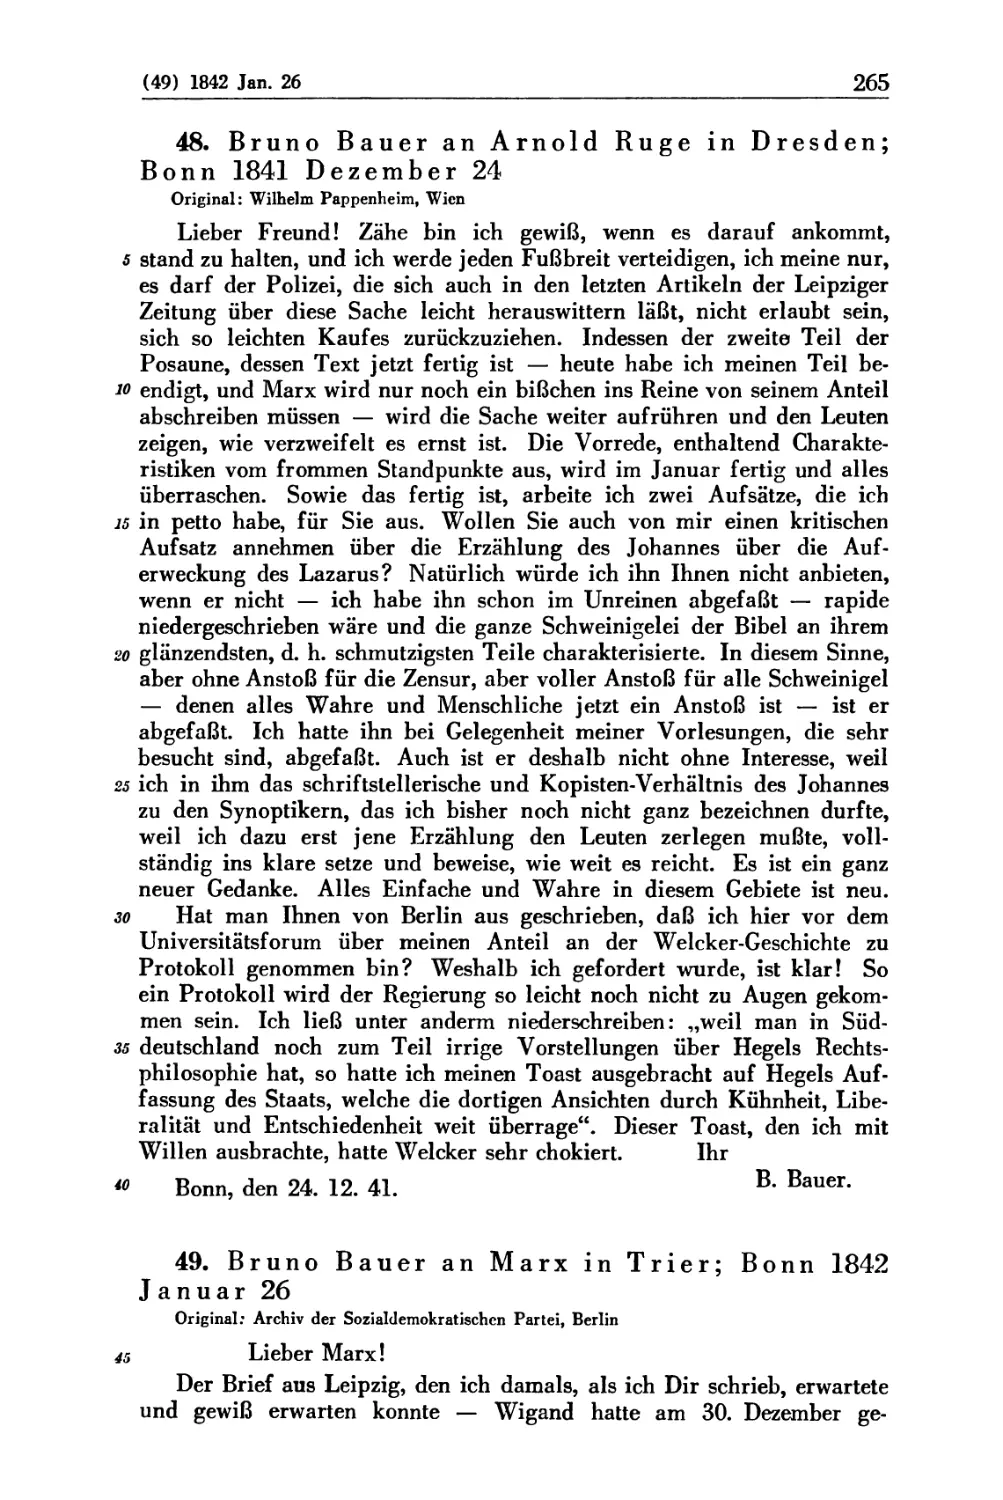 48. Bruno Bauer an Arnold Ruge in Dresden; Bonn 1841 Dezember 24
49. Bruno Bauer an Marx in Trier; Bonn 1842 Januar 26